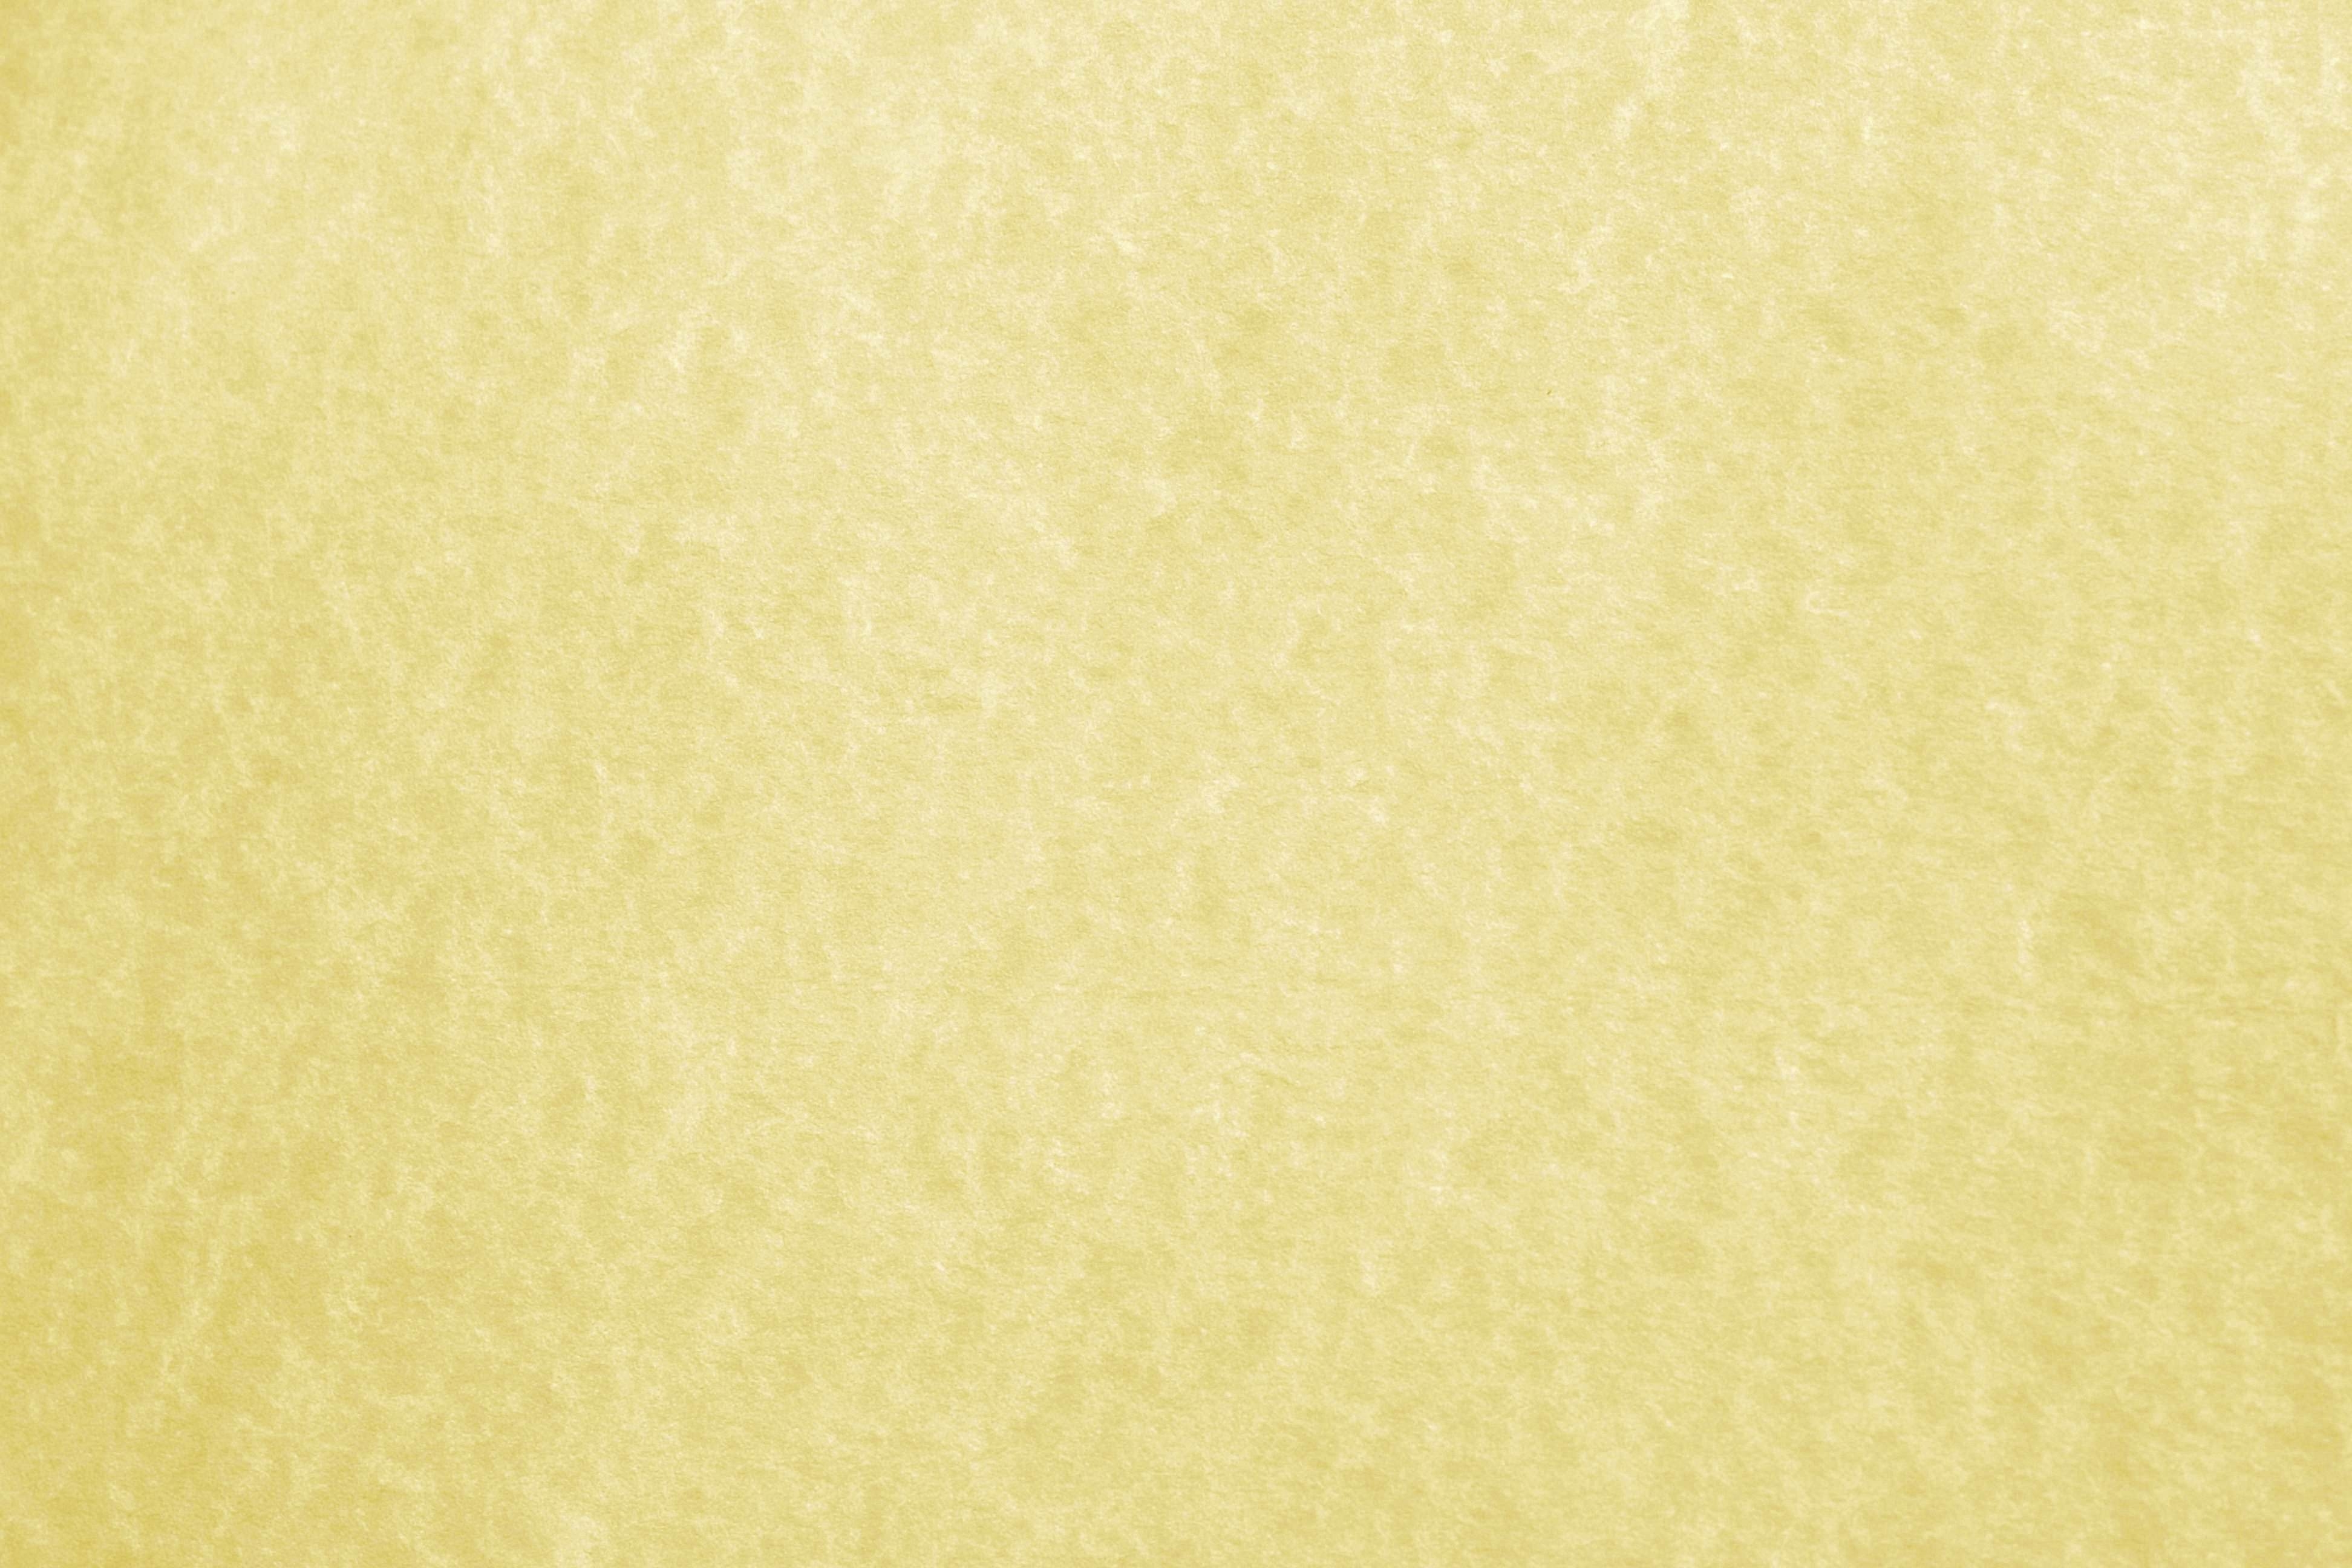 carta da parati pergamena,giallo,beige,tessile,sfondo,carta